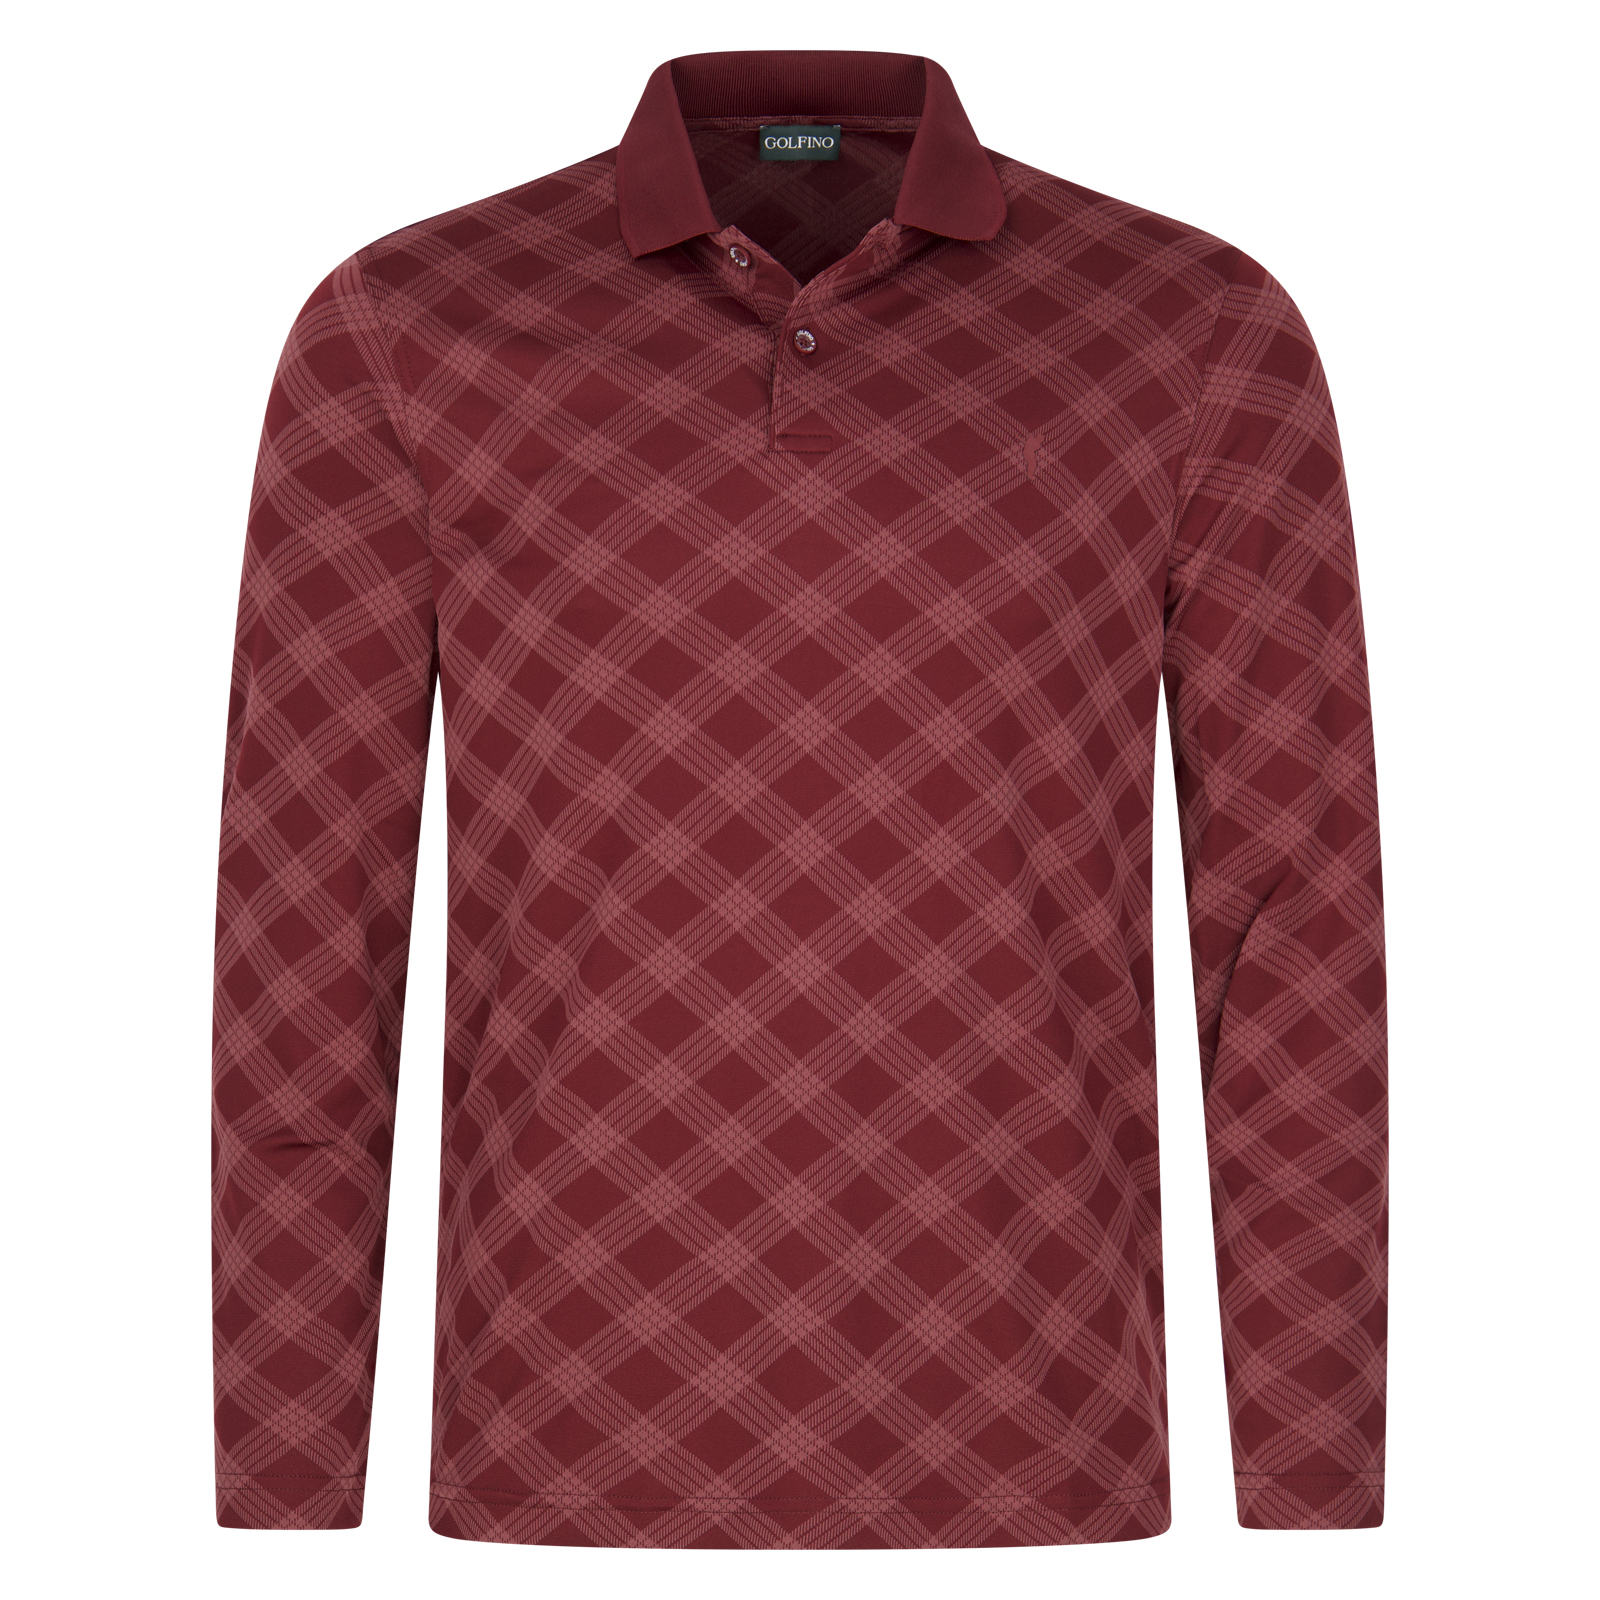 Men's quick dry long-sleeved golf polo shirt